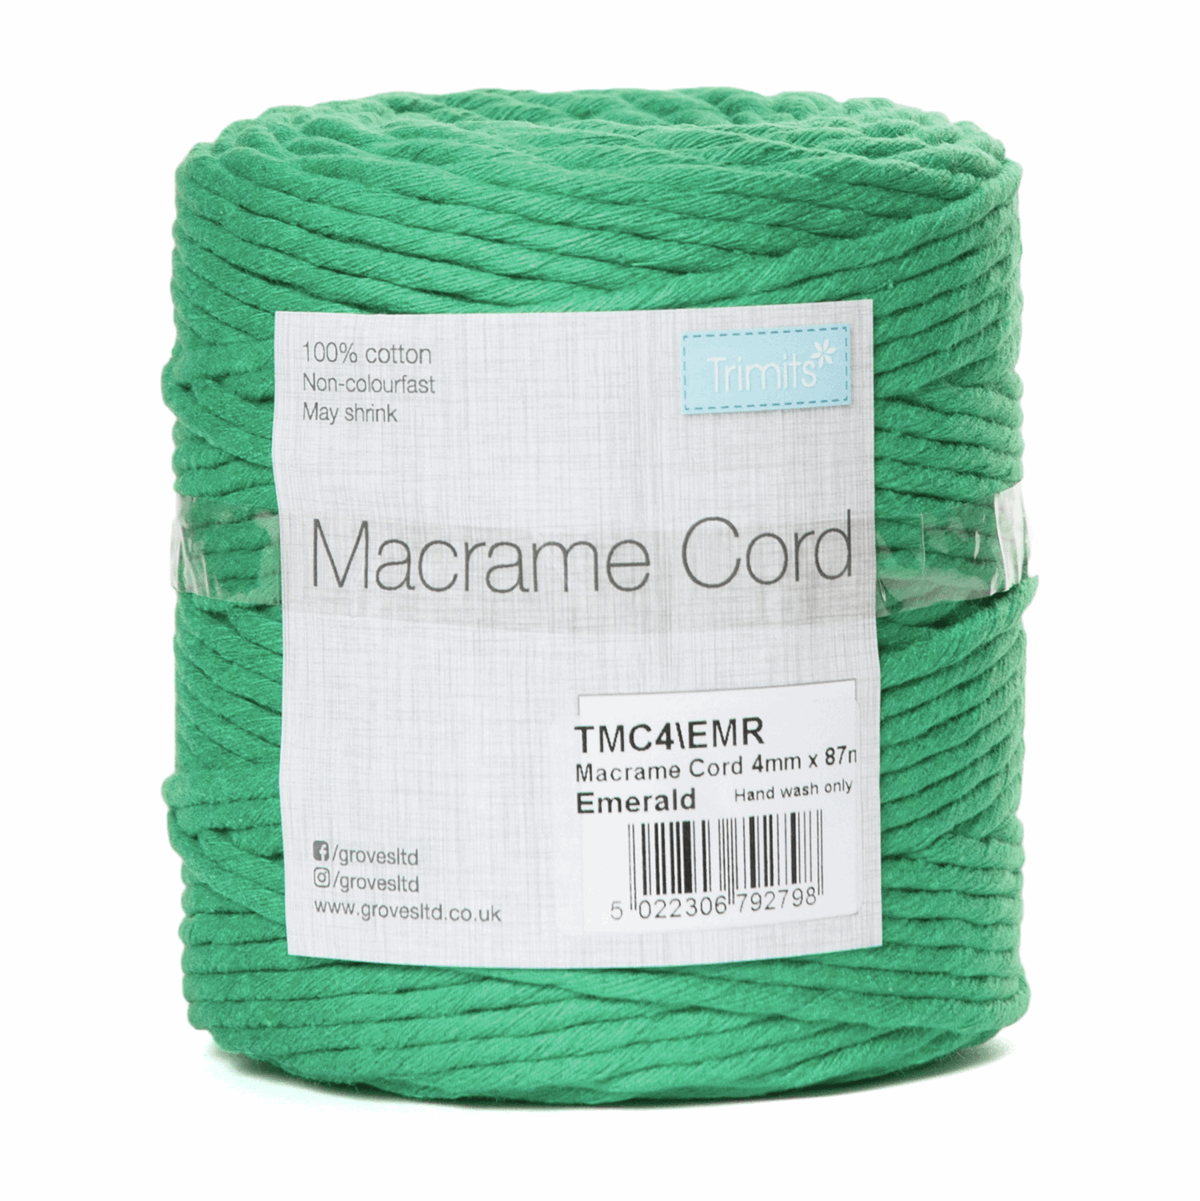 Emerald Macrame Cord - 87m x 4mm